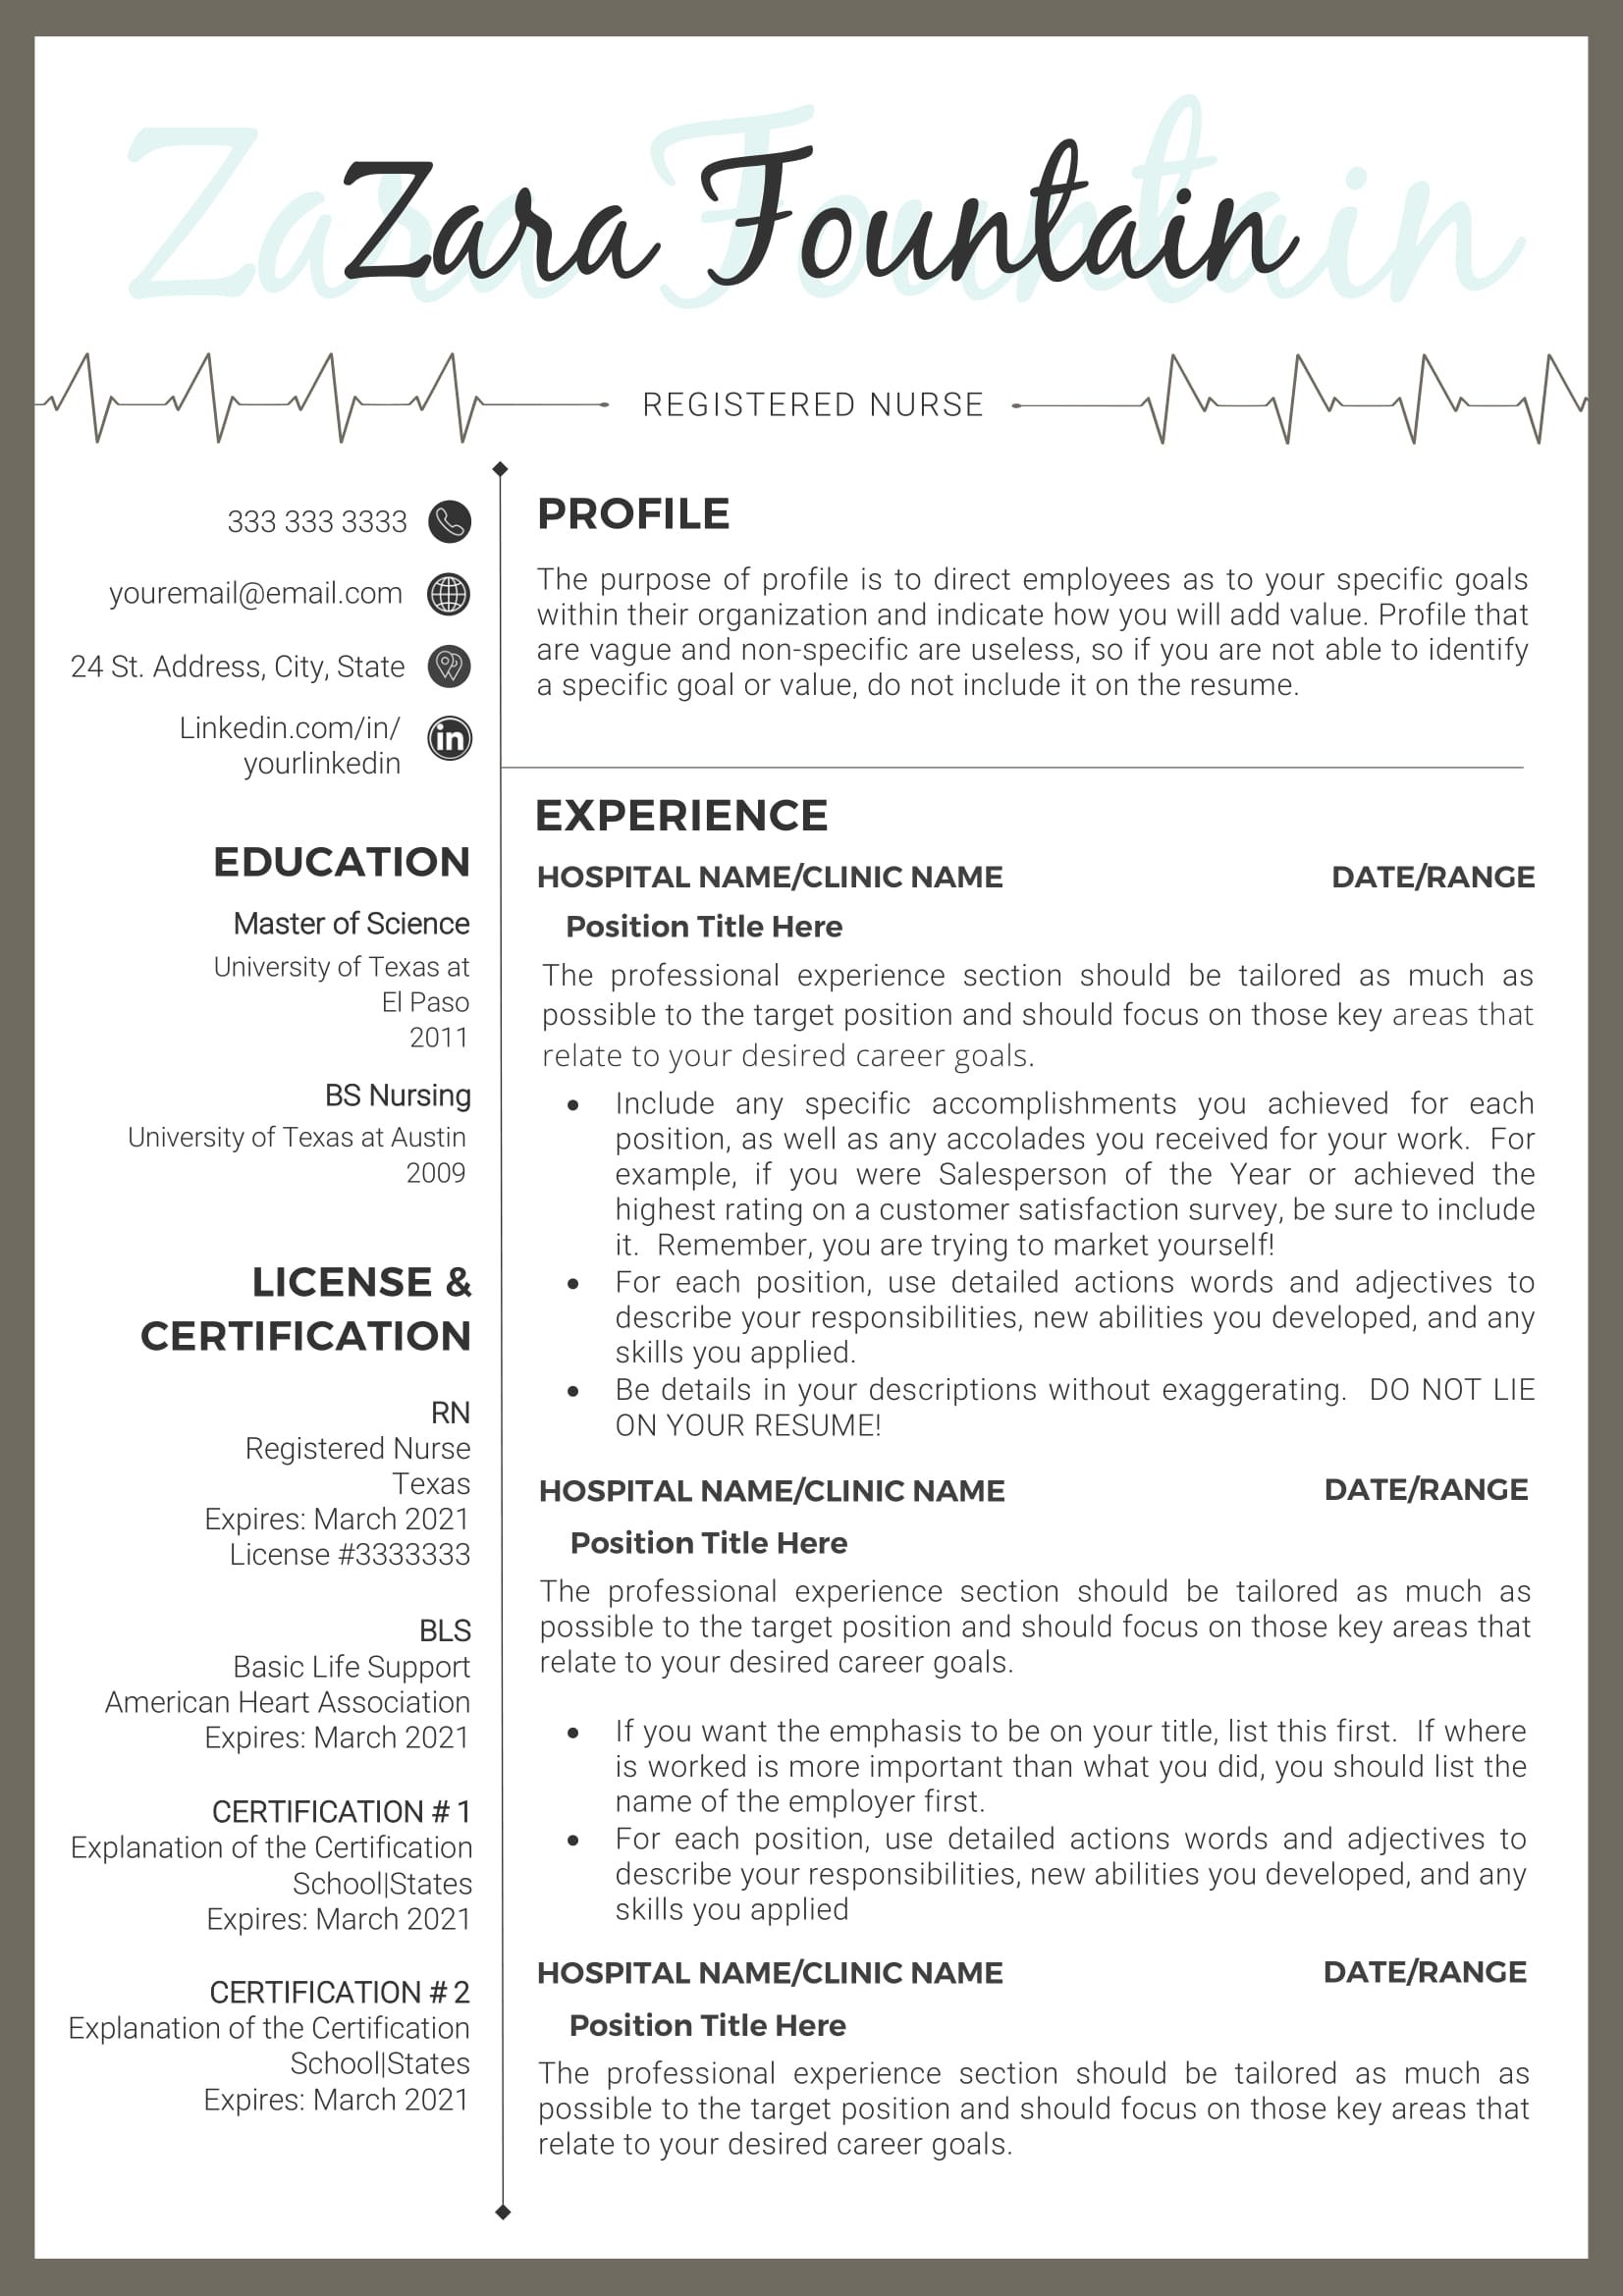 Professional nurse resume with a nurse's name.